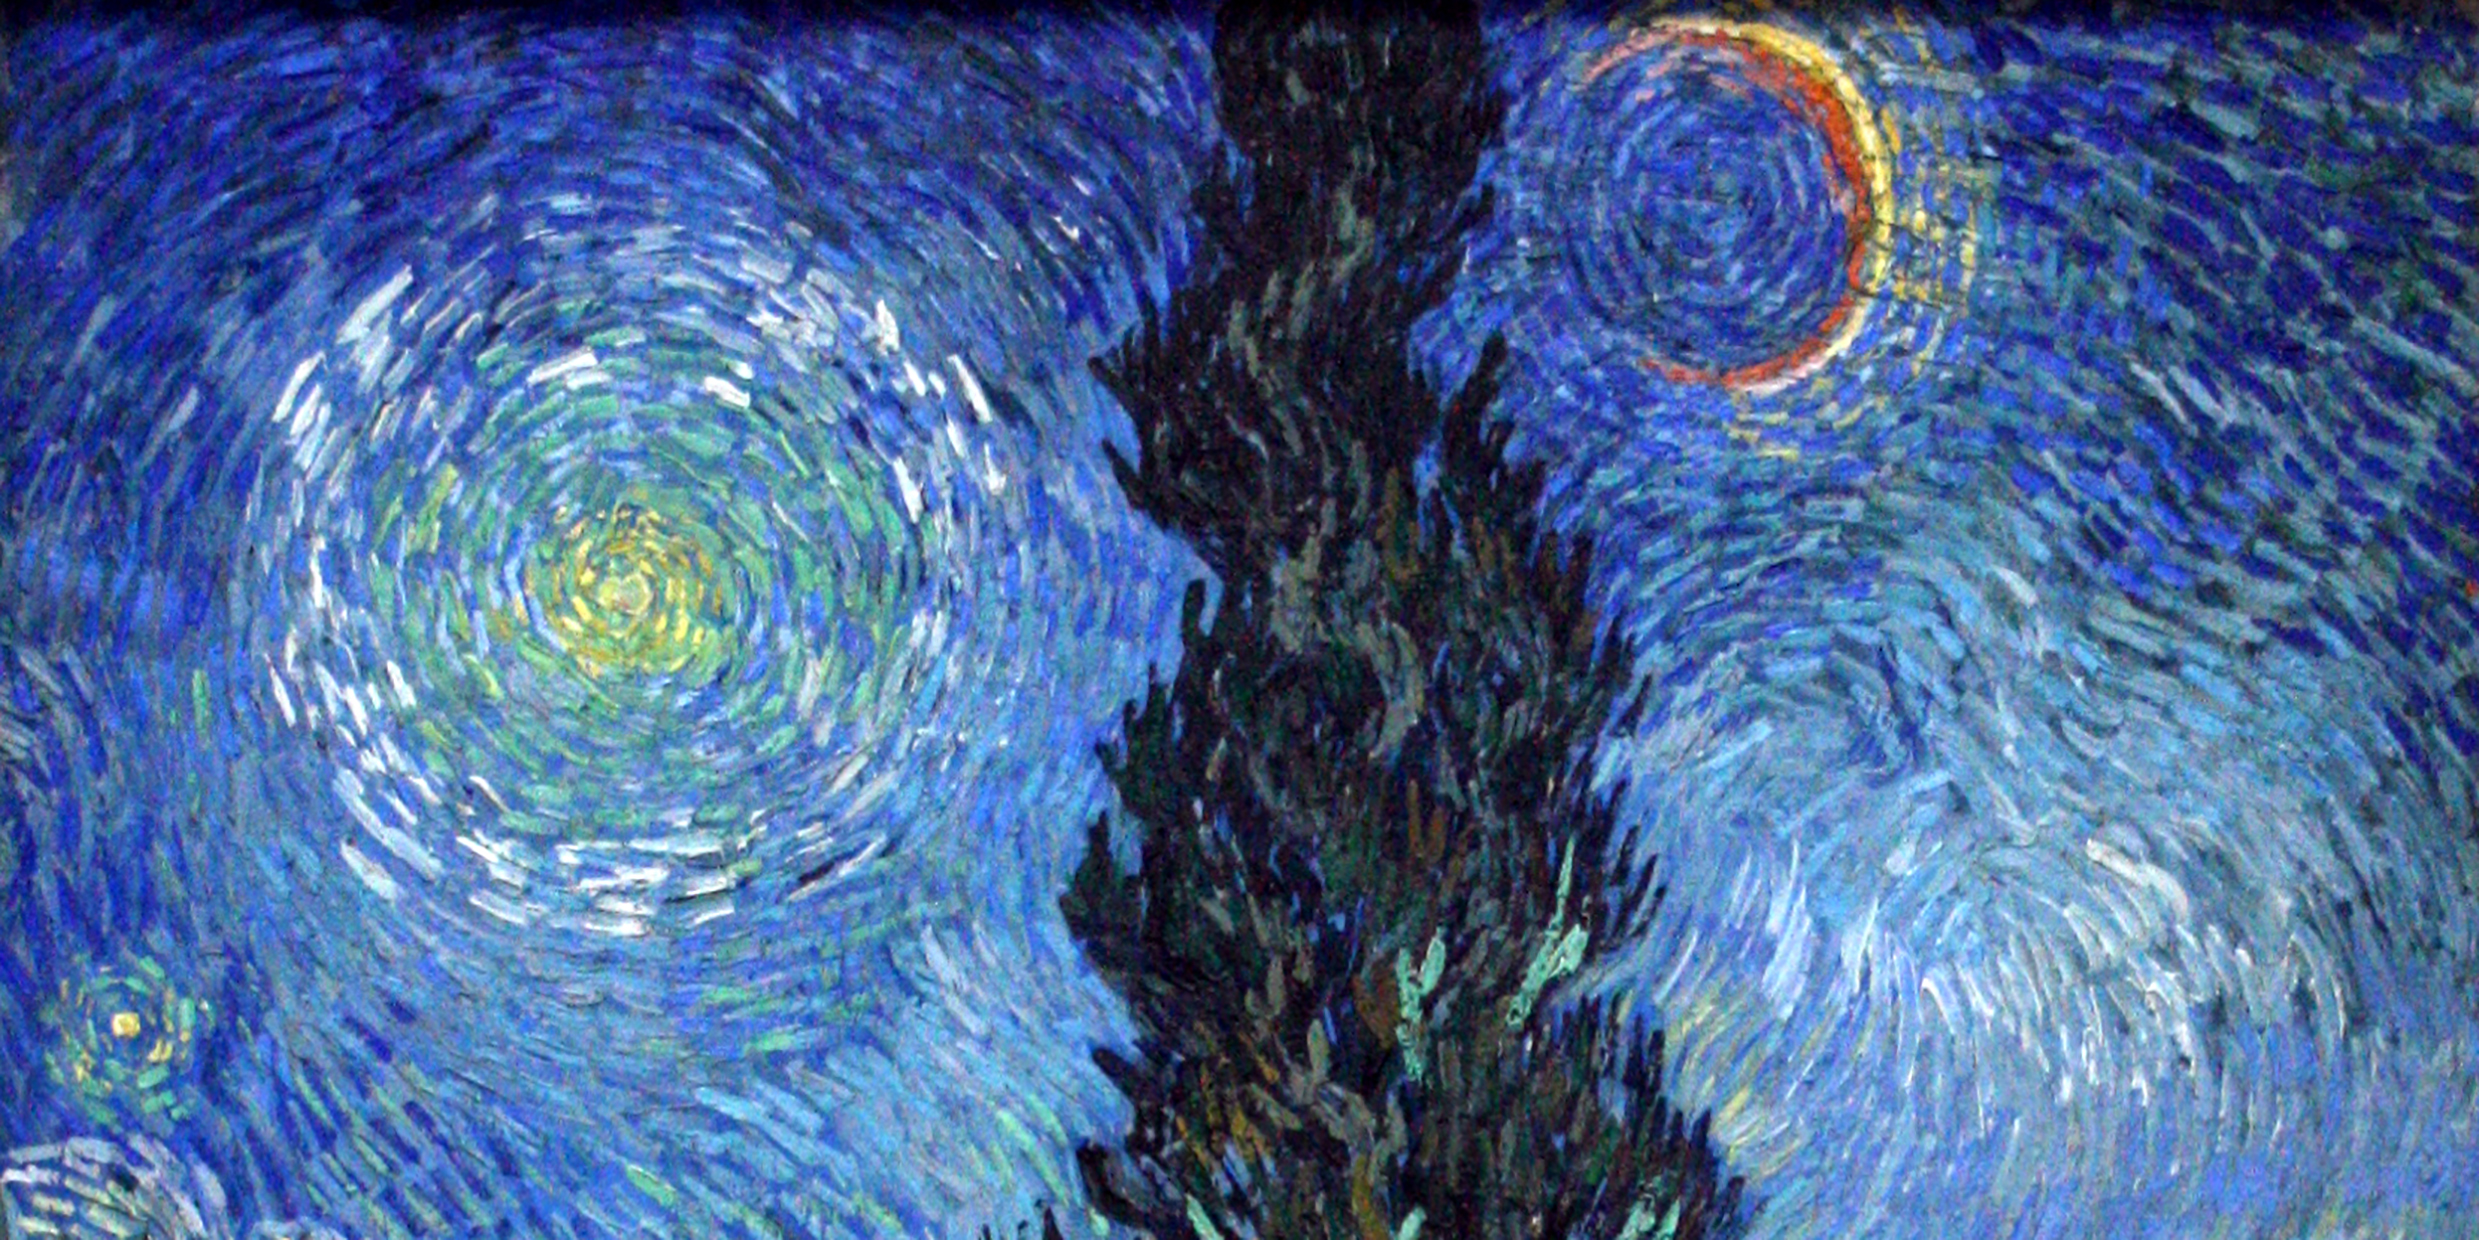 Van Gogh’s night